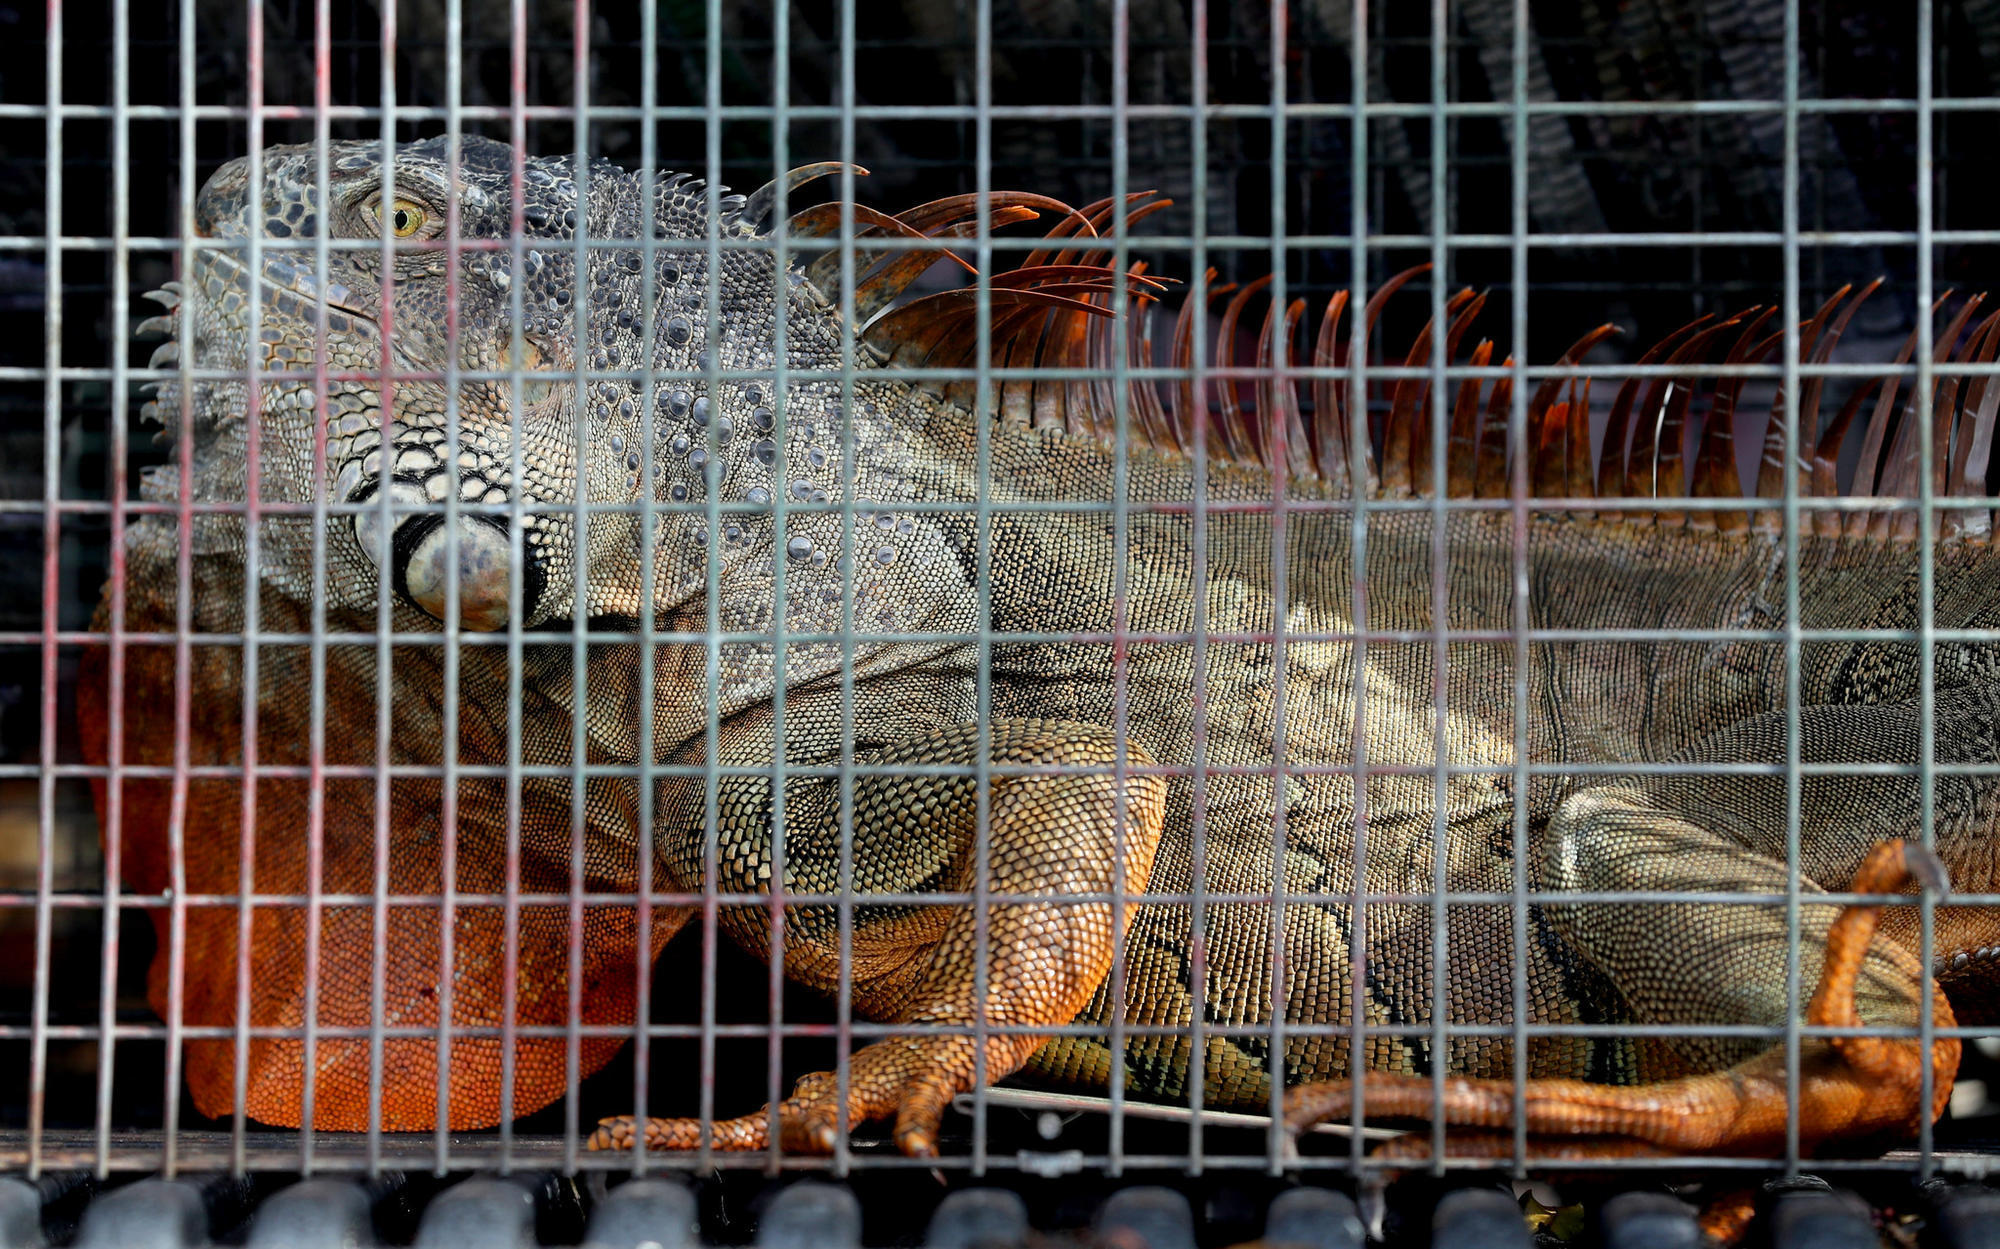 How to kill an iguana (legally) - Sun Sentinel2000 x 1249